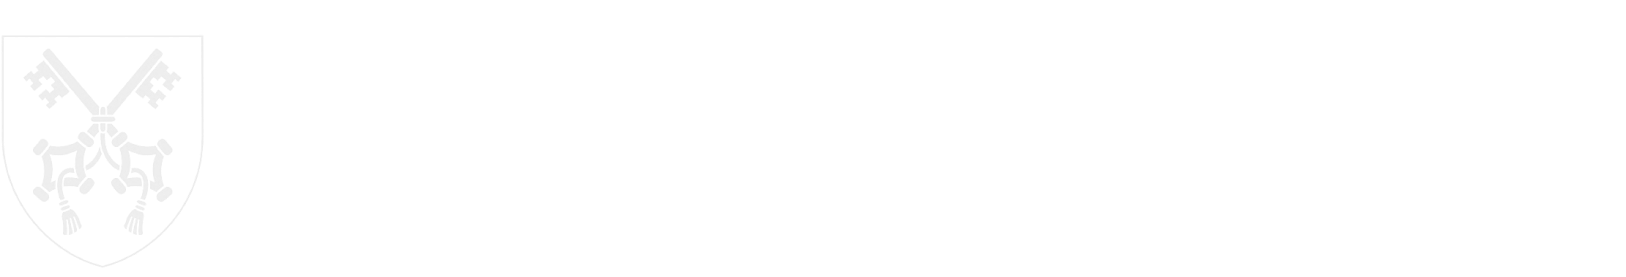 Pontifical University of John Pauł II Logo